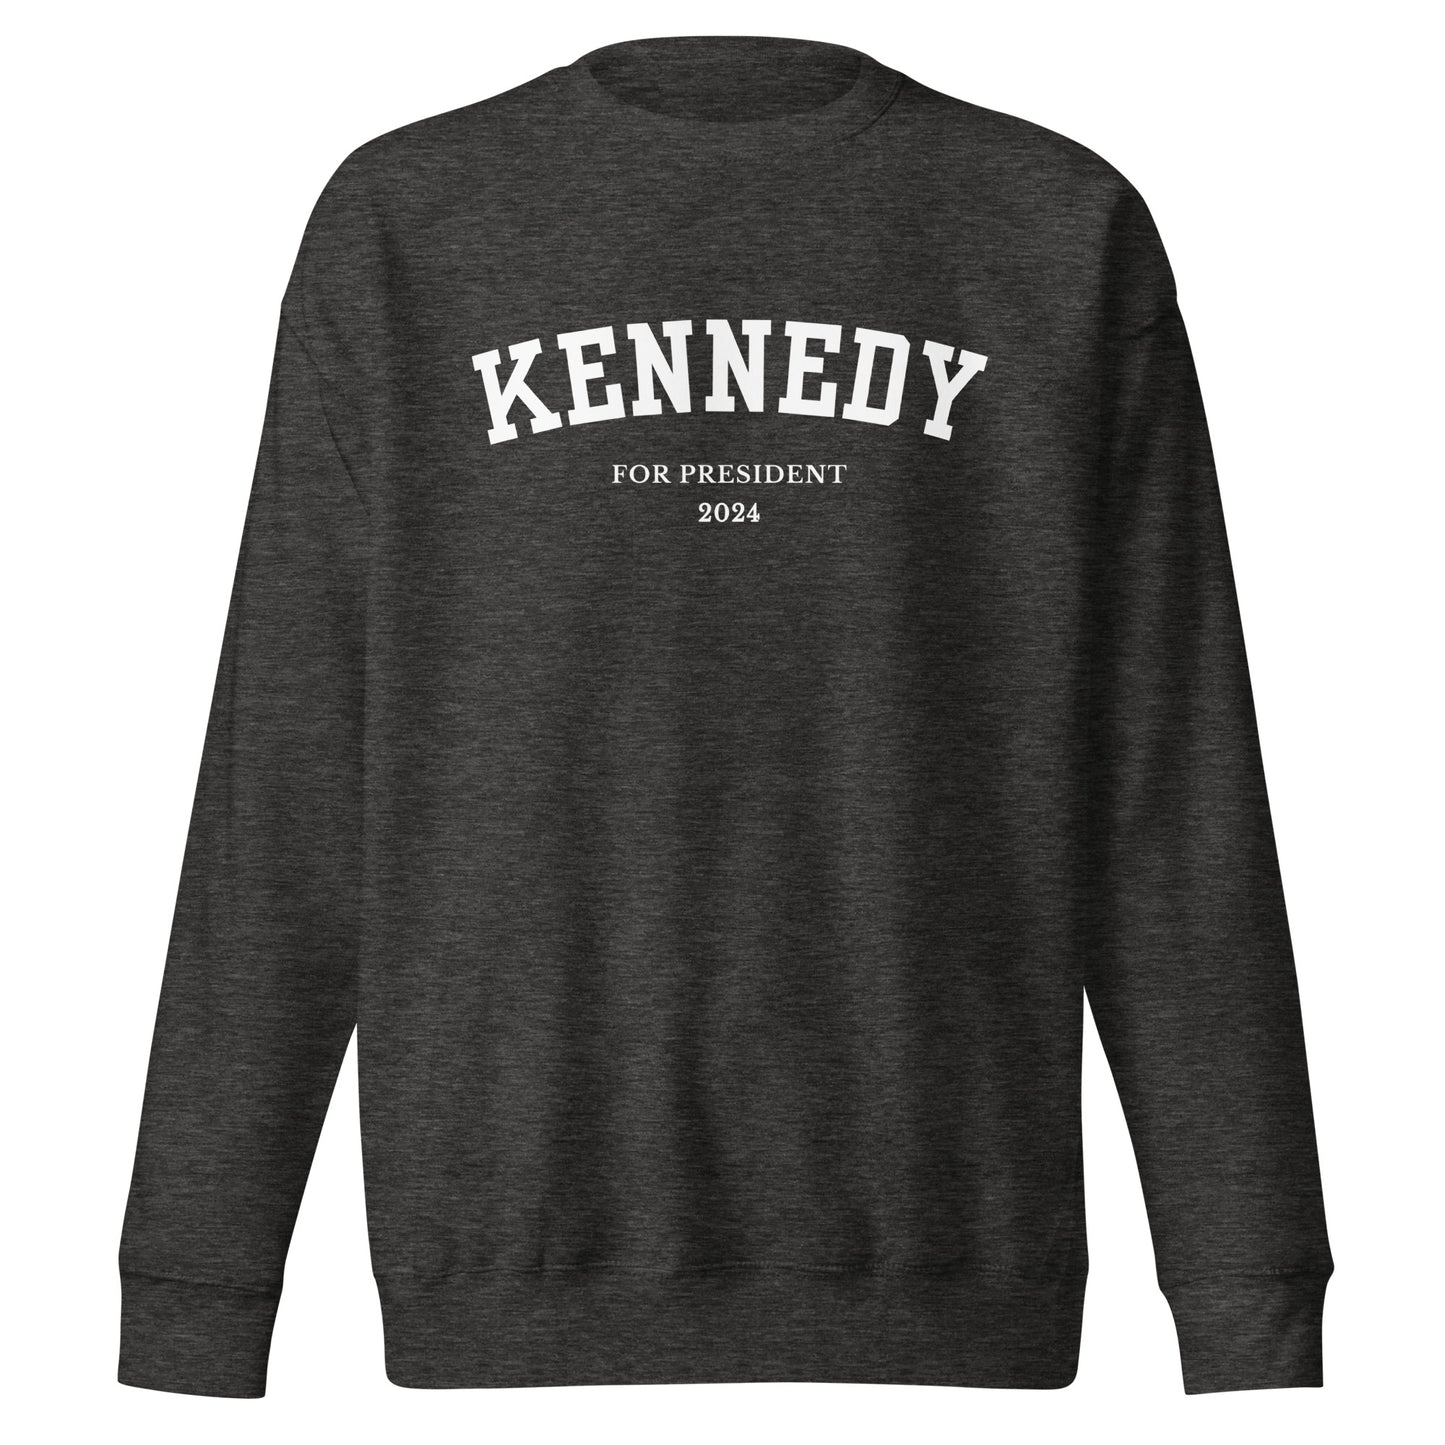 Kennedy for President Collegiate Premium Sweatshirt